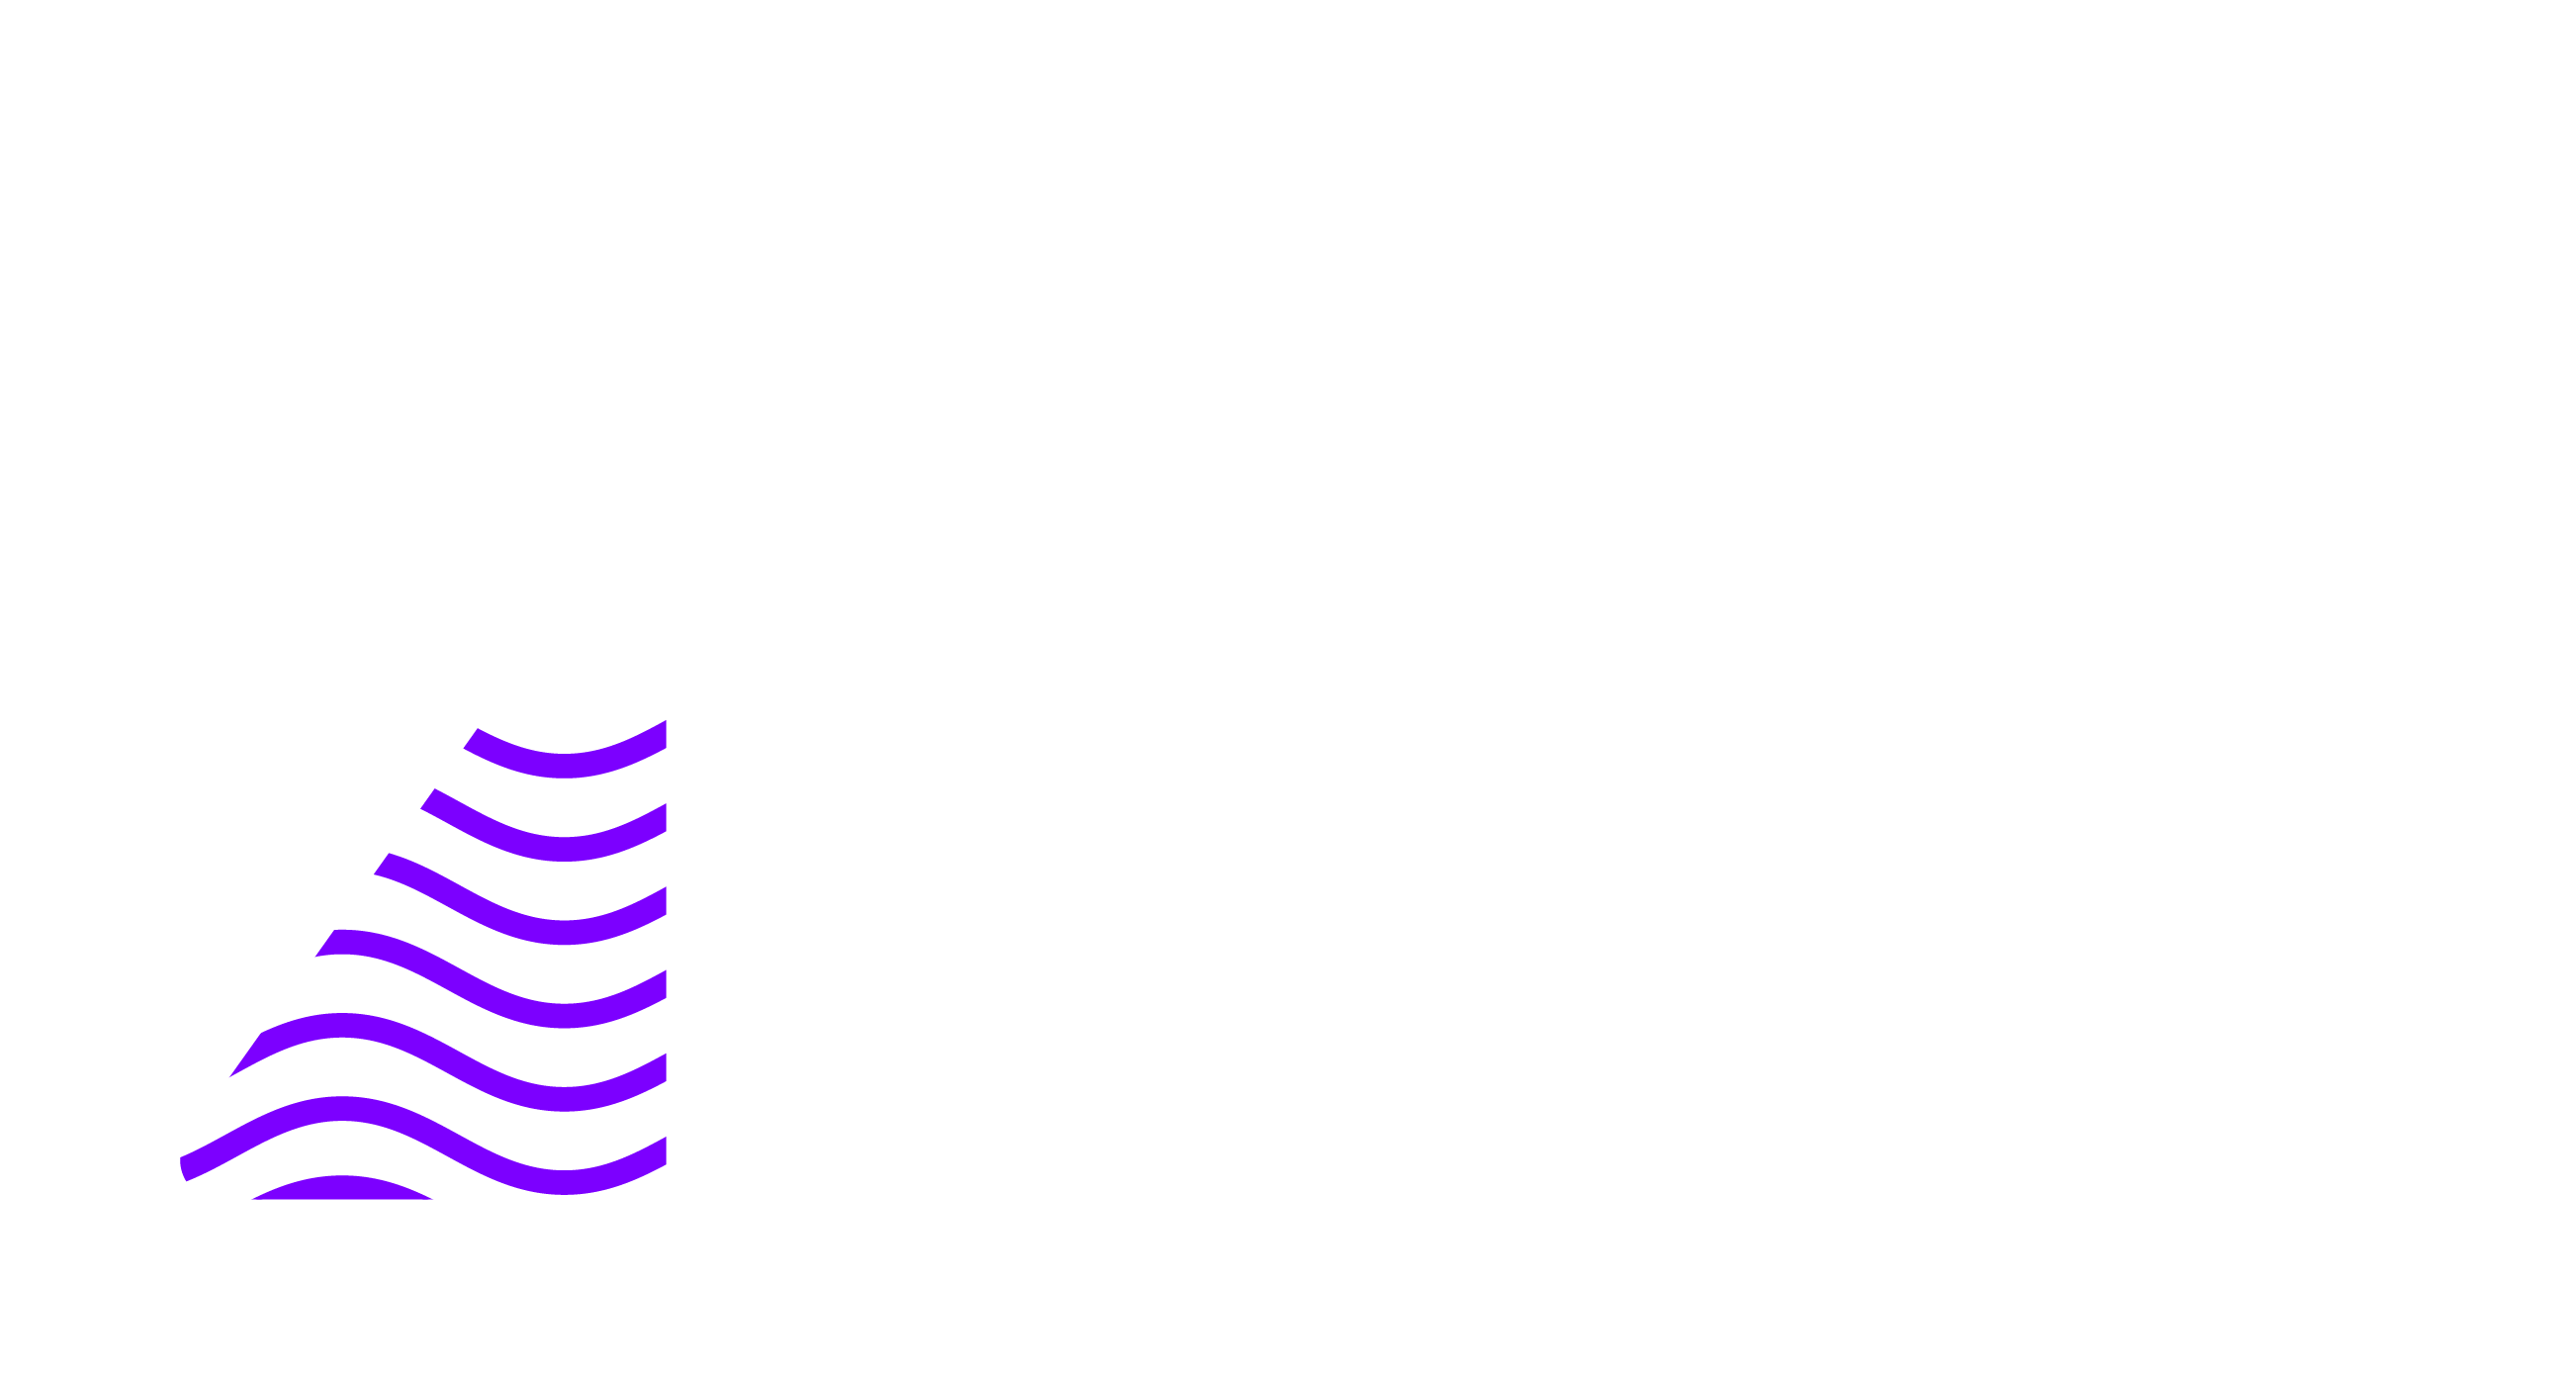 The online lab logo